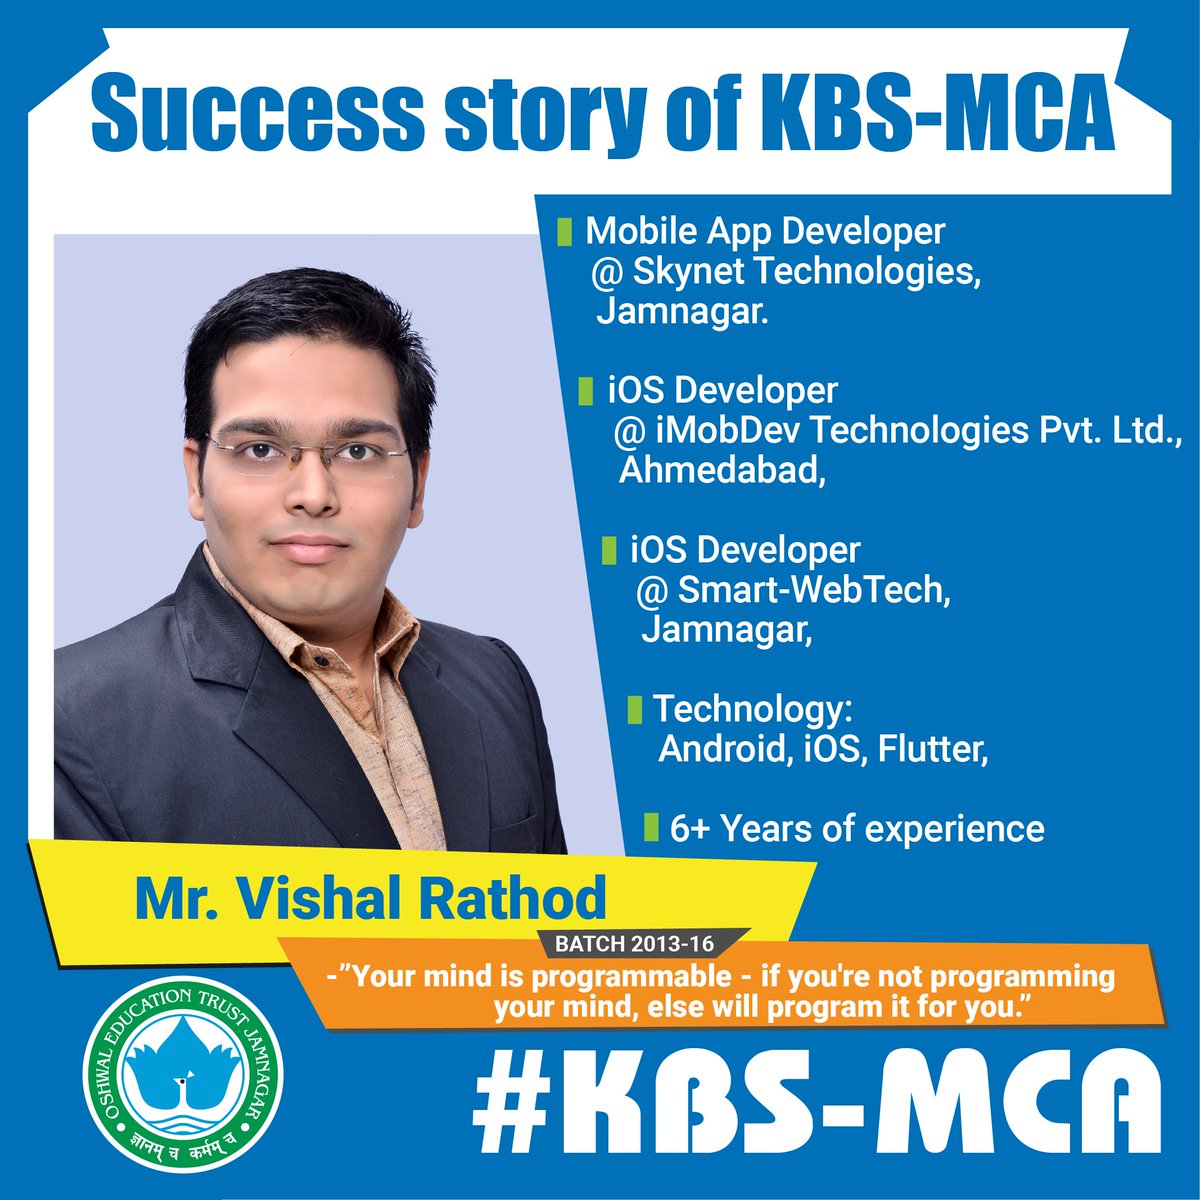 #Vishal_Rathod
#iOS_Developer
#An_Alumnus_of_JVIMS
#Jamnagar
#JVIMS_Memories
#JVIAMS
#MCA
#JVIMS_MCA_College
#MCA_in_Jamnagar